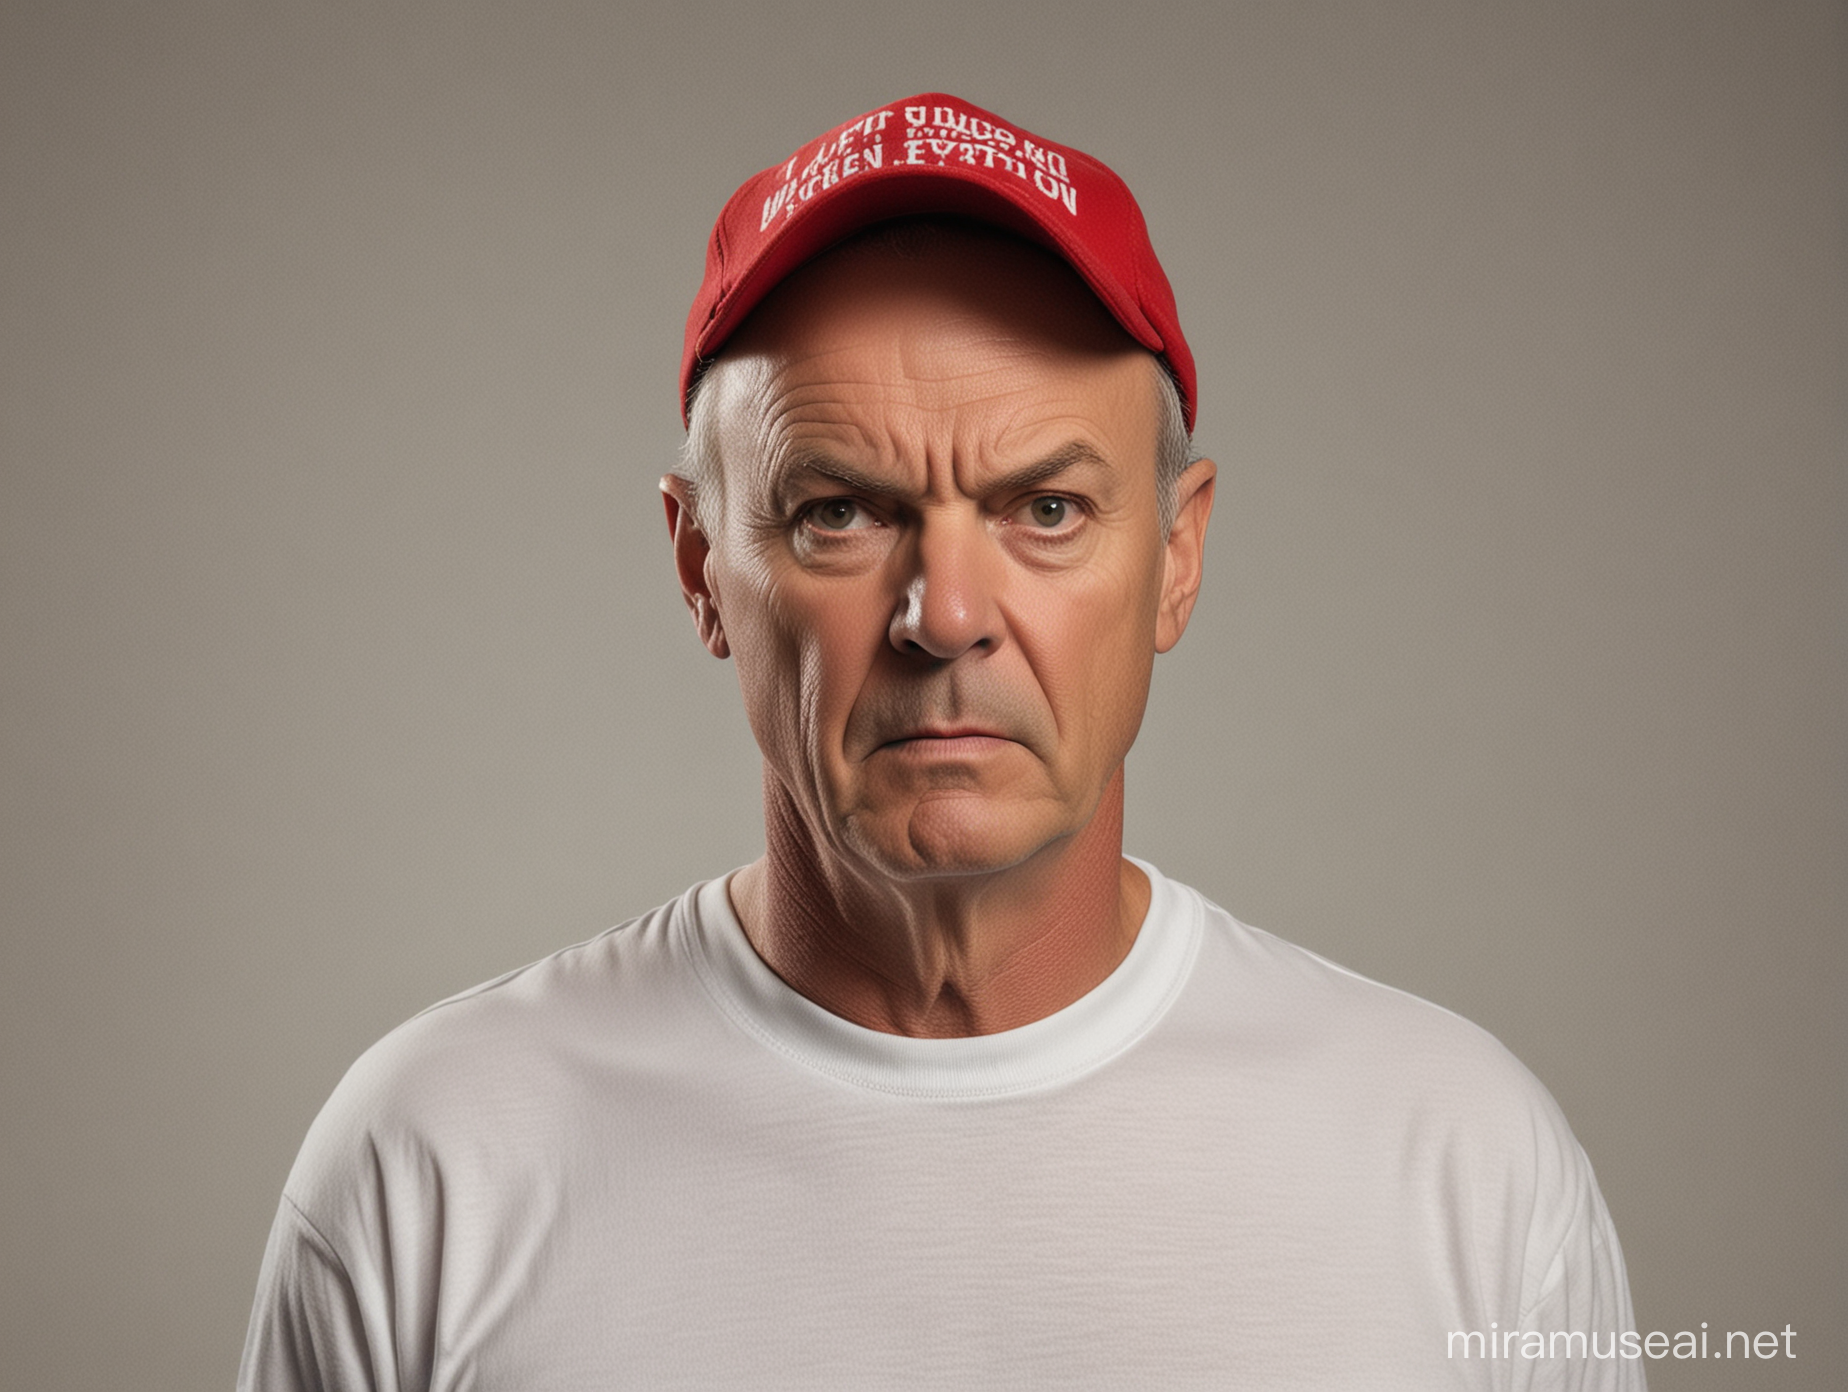 Furious Elderly Man Resembling Michael Keaton in Red Cap and White TShirt